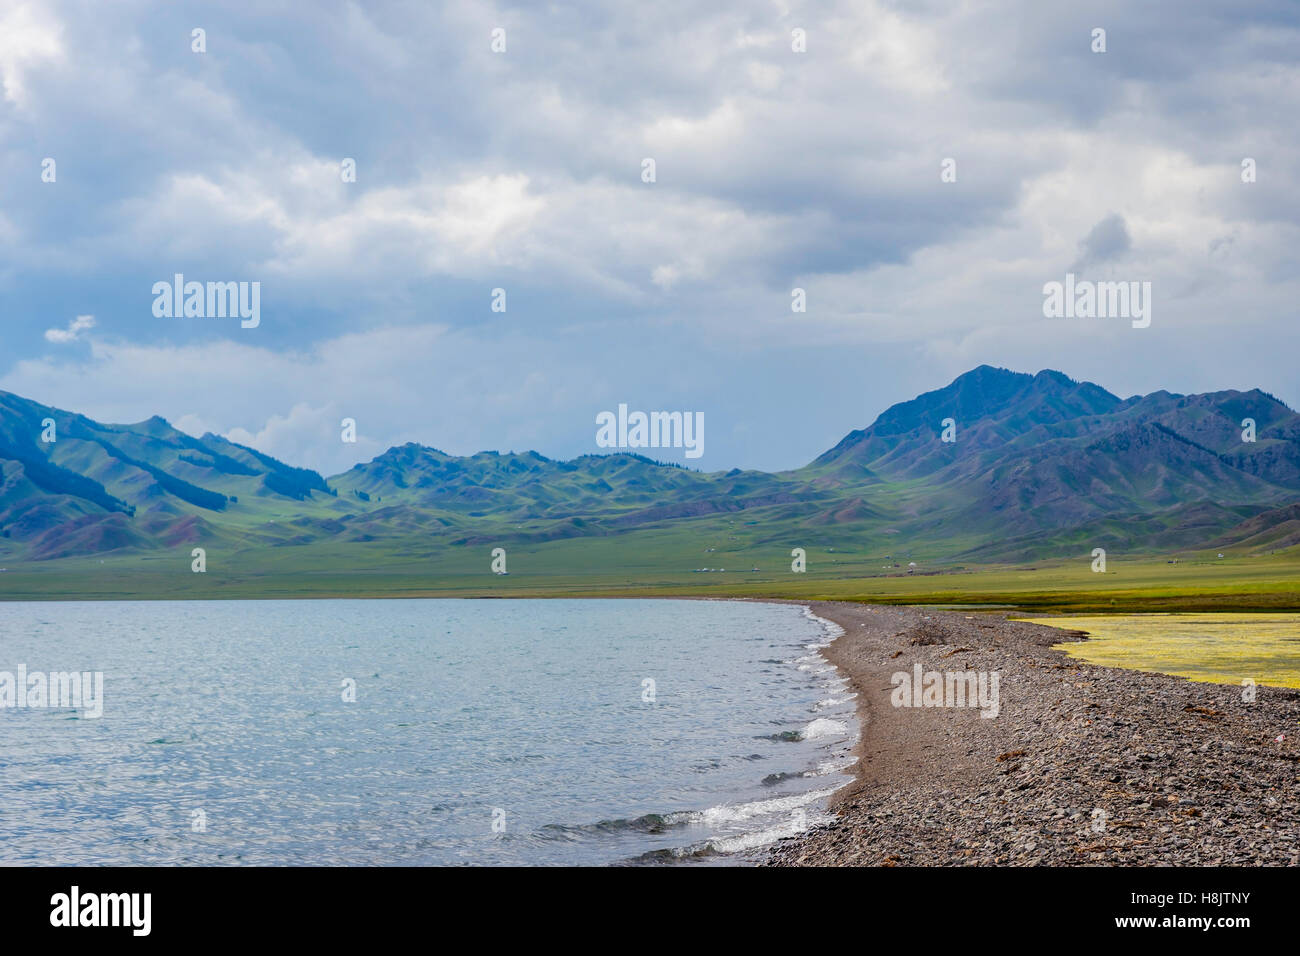 Paesaggio a Sayram lago, Xinjiang Uyghur regione autonoma, Cina Foto Stock